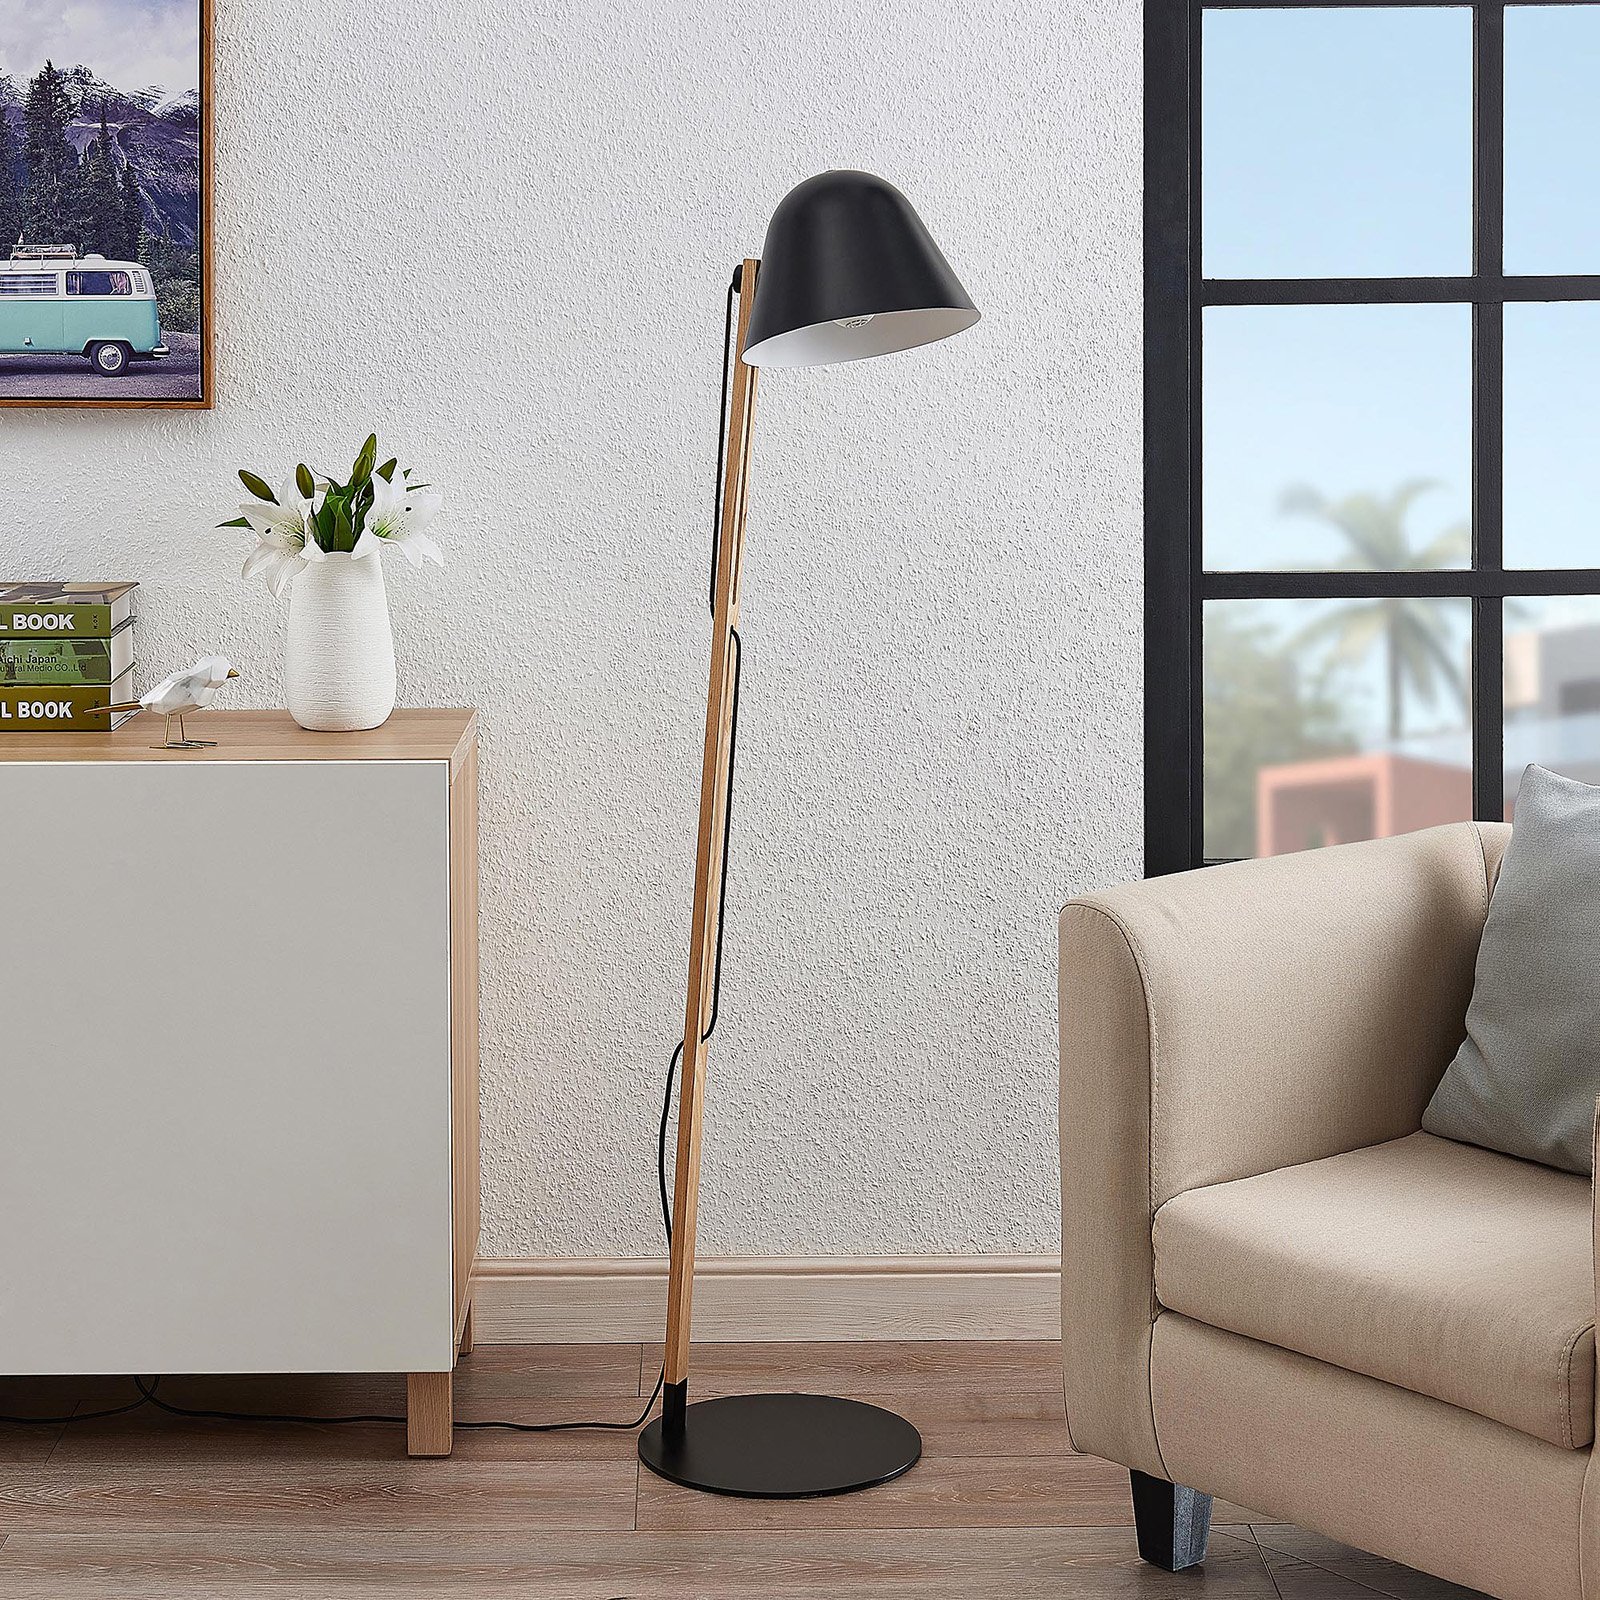 Lindby Tetja floor lamp with a wooden rod, black